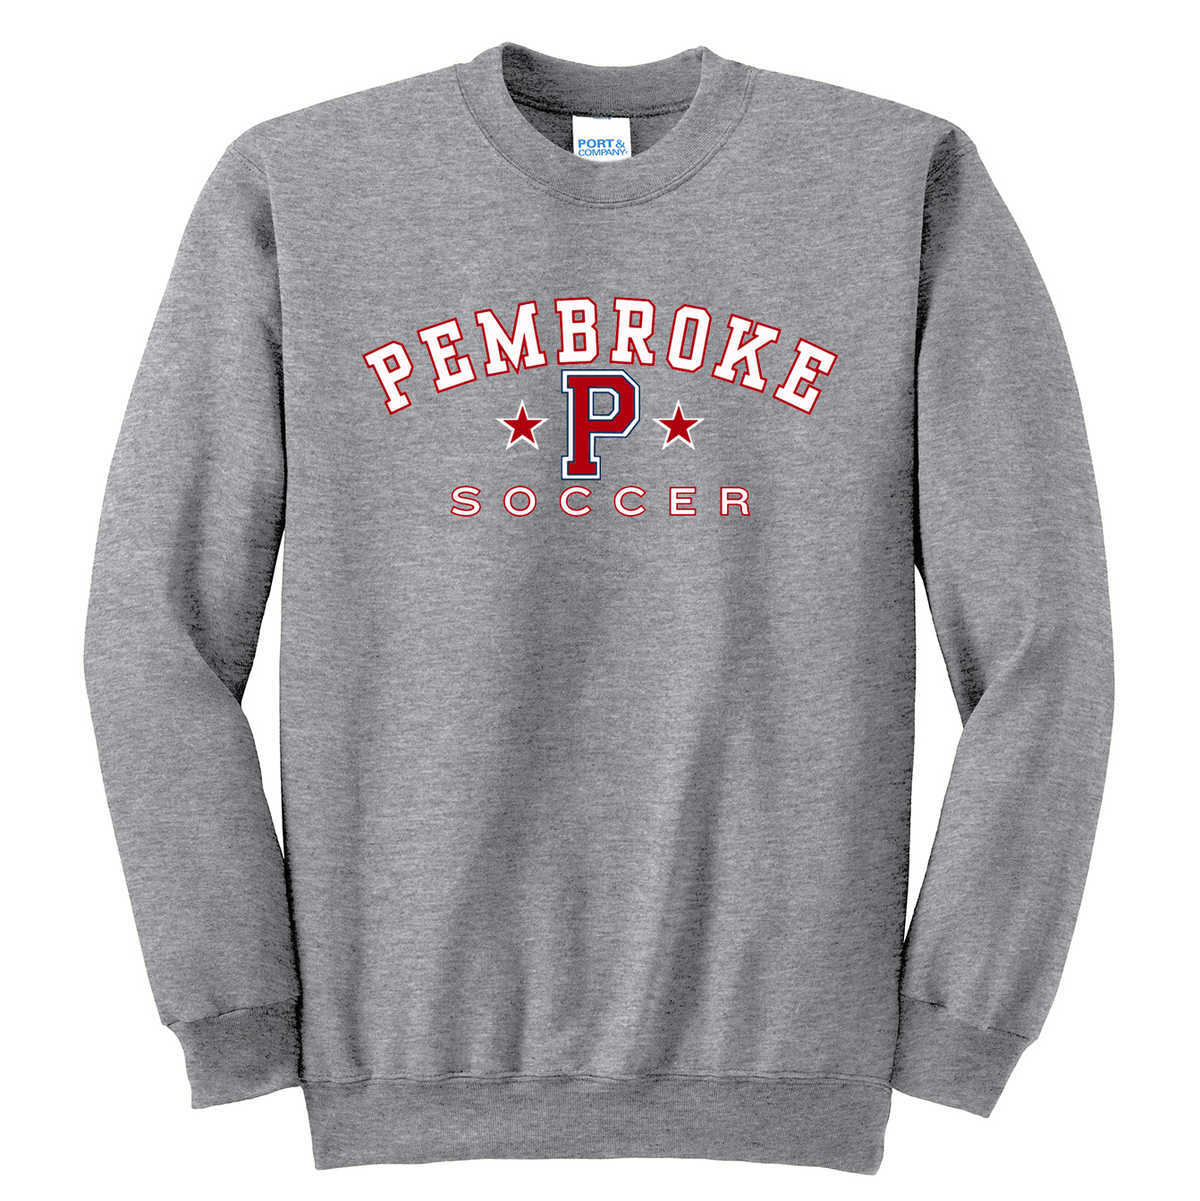 Pembroke Soccer Crew Neck Sweater